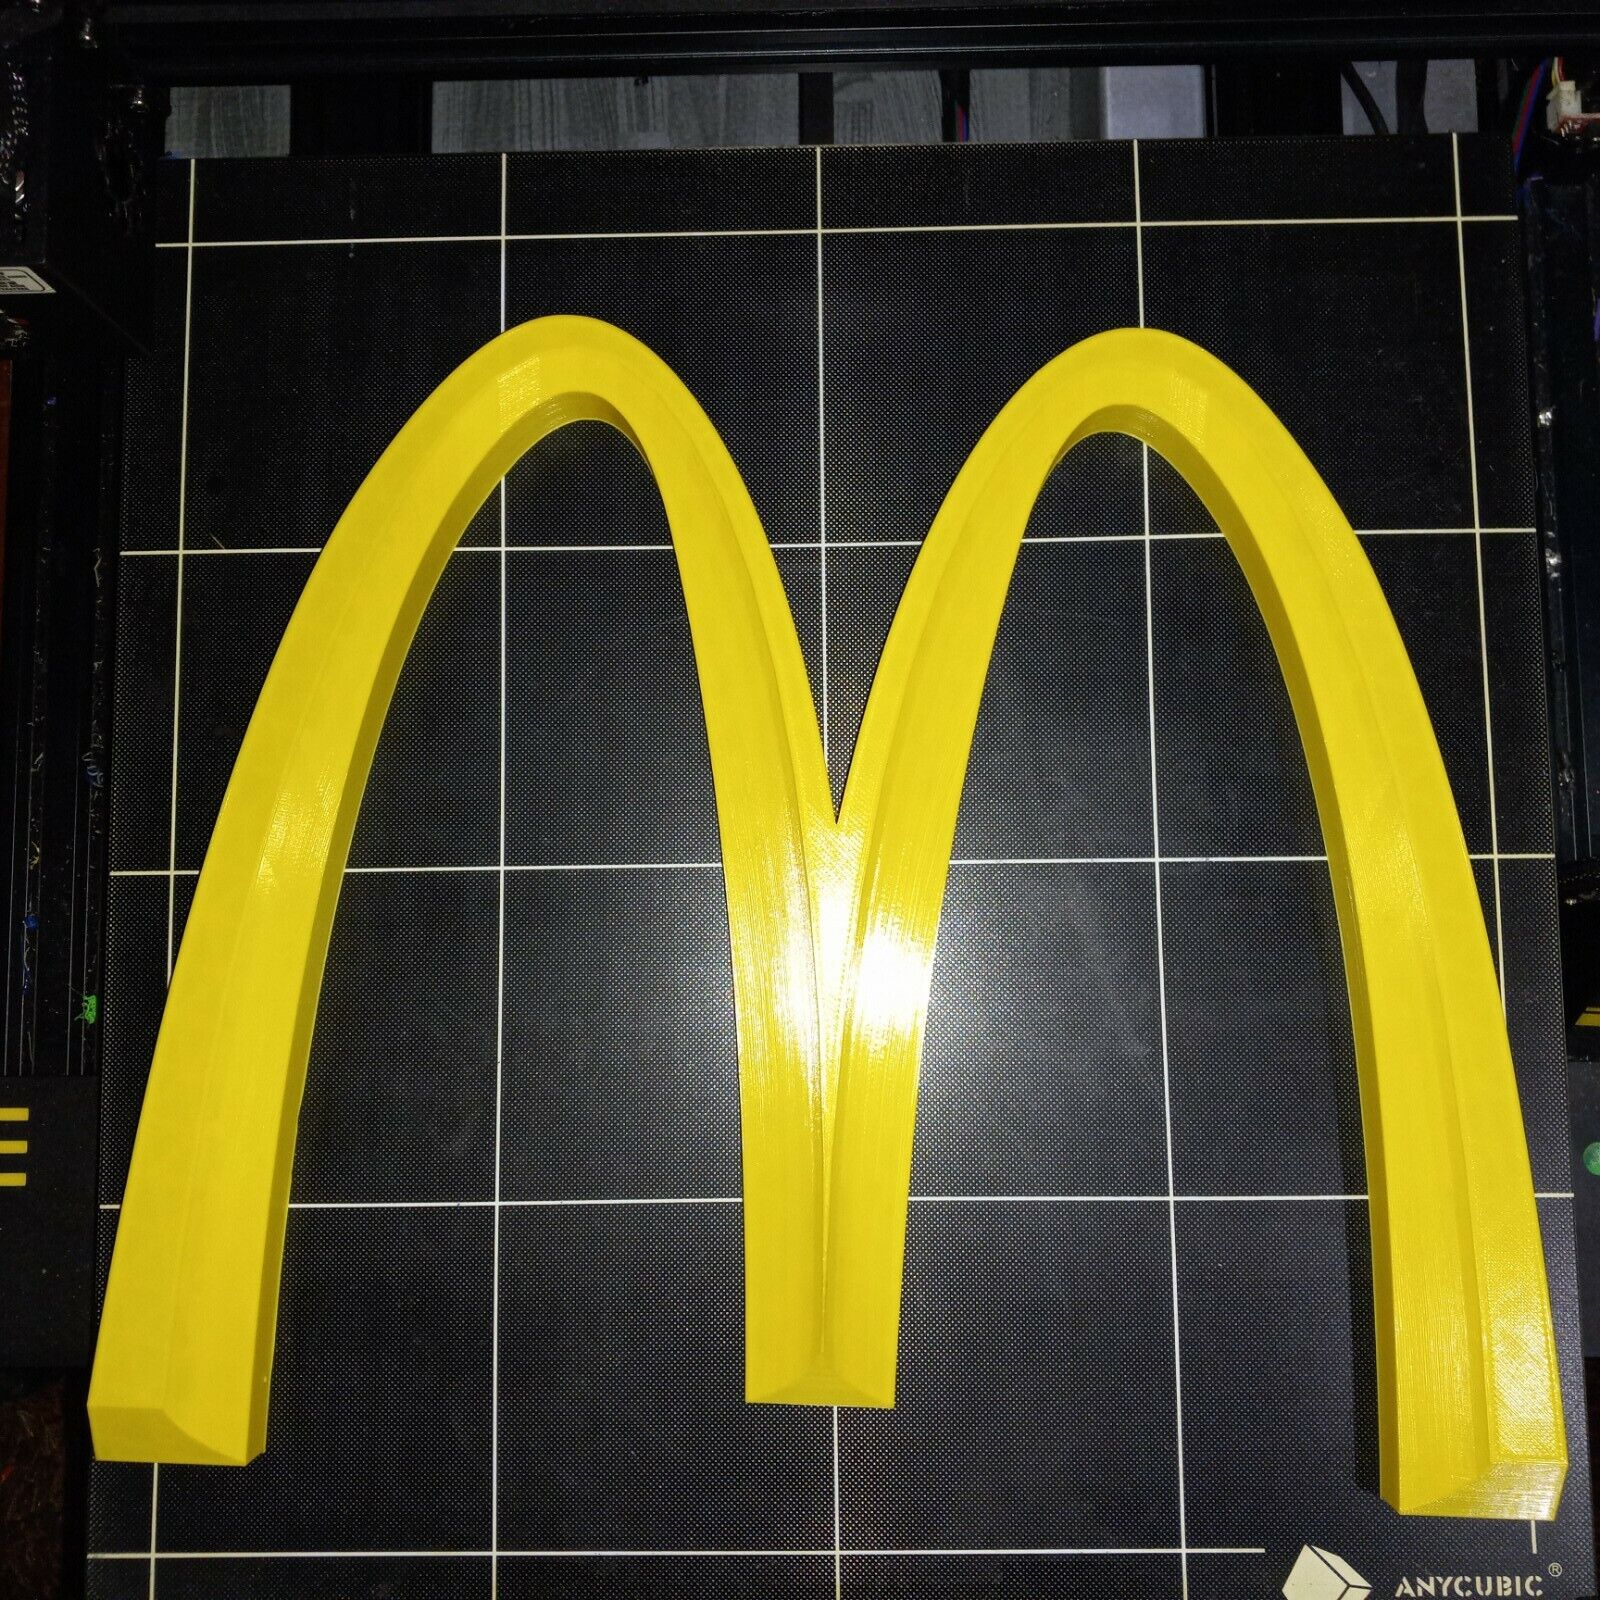 SALE McDonald’s Big “M” 3D Advertising Sign Golden Arches 19\